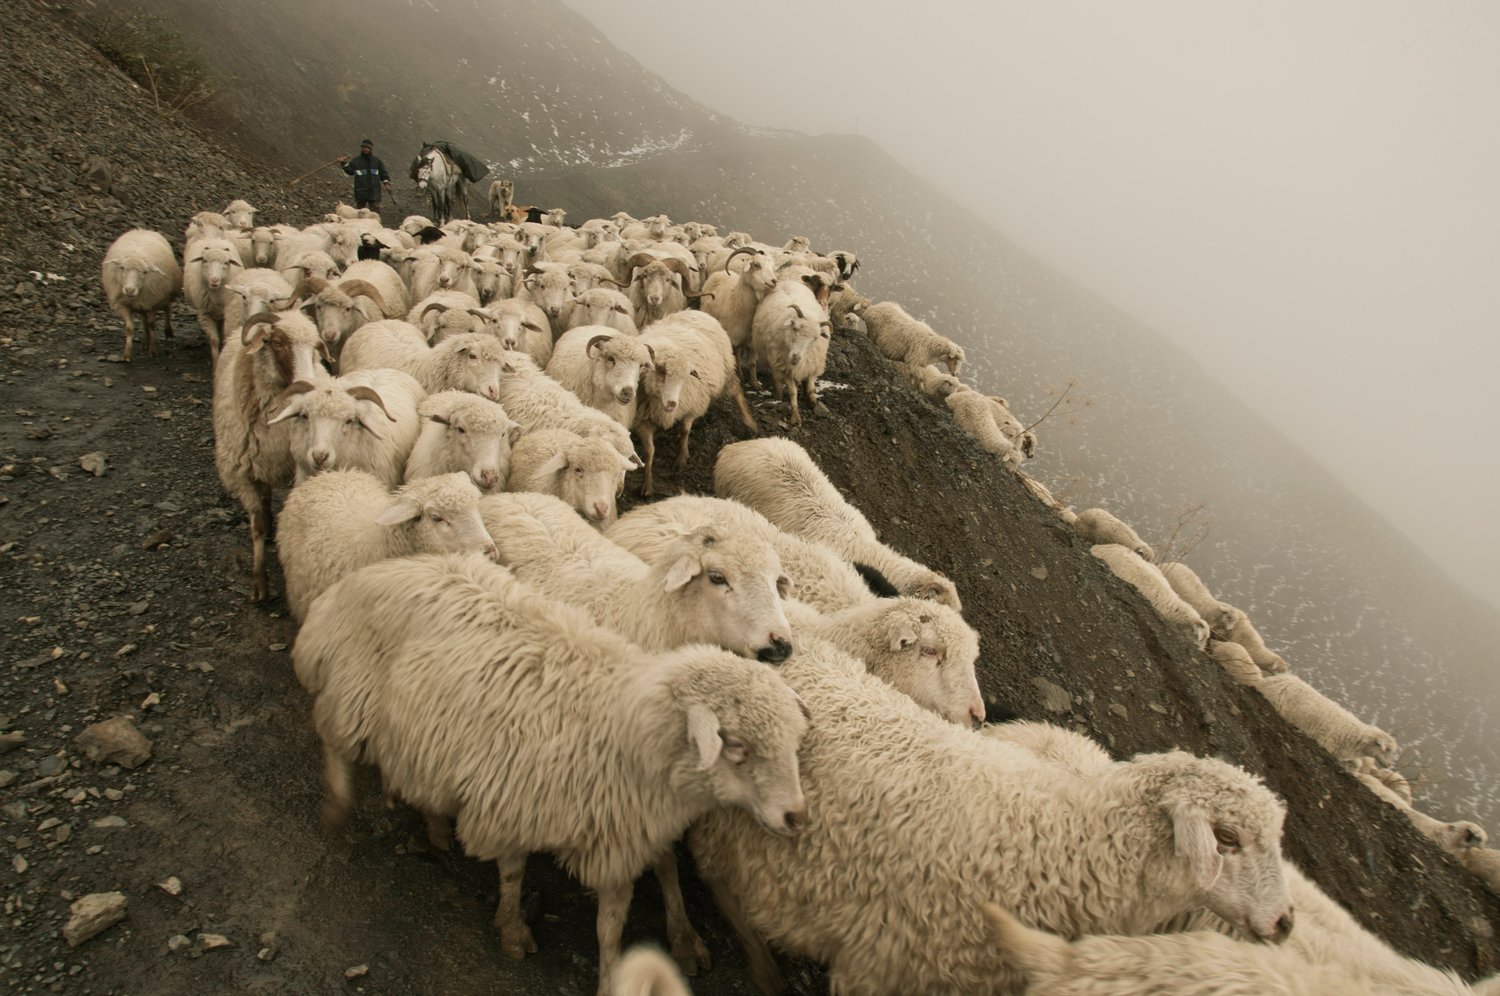 Image of Sheep. Natia Rekhviashvili. Limited Edition print